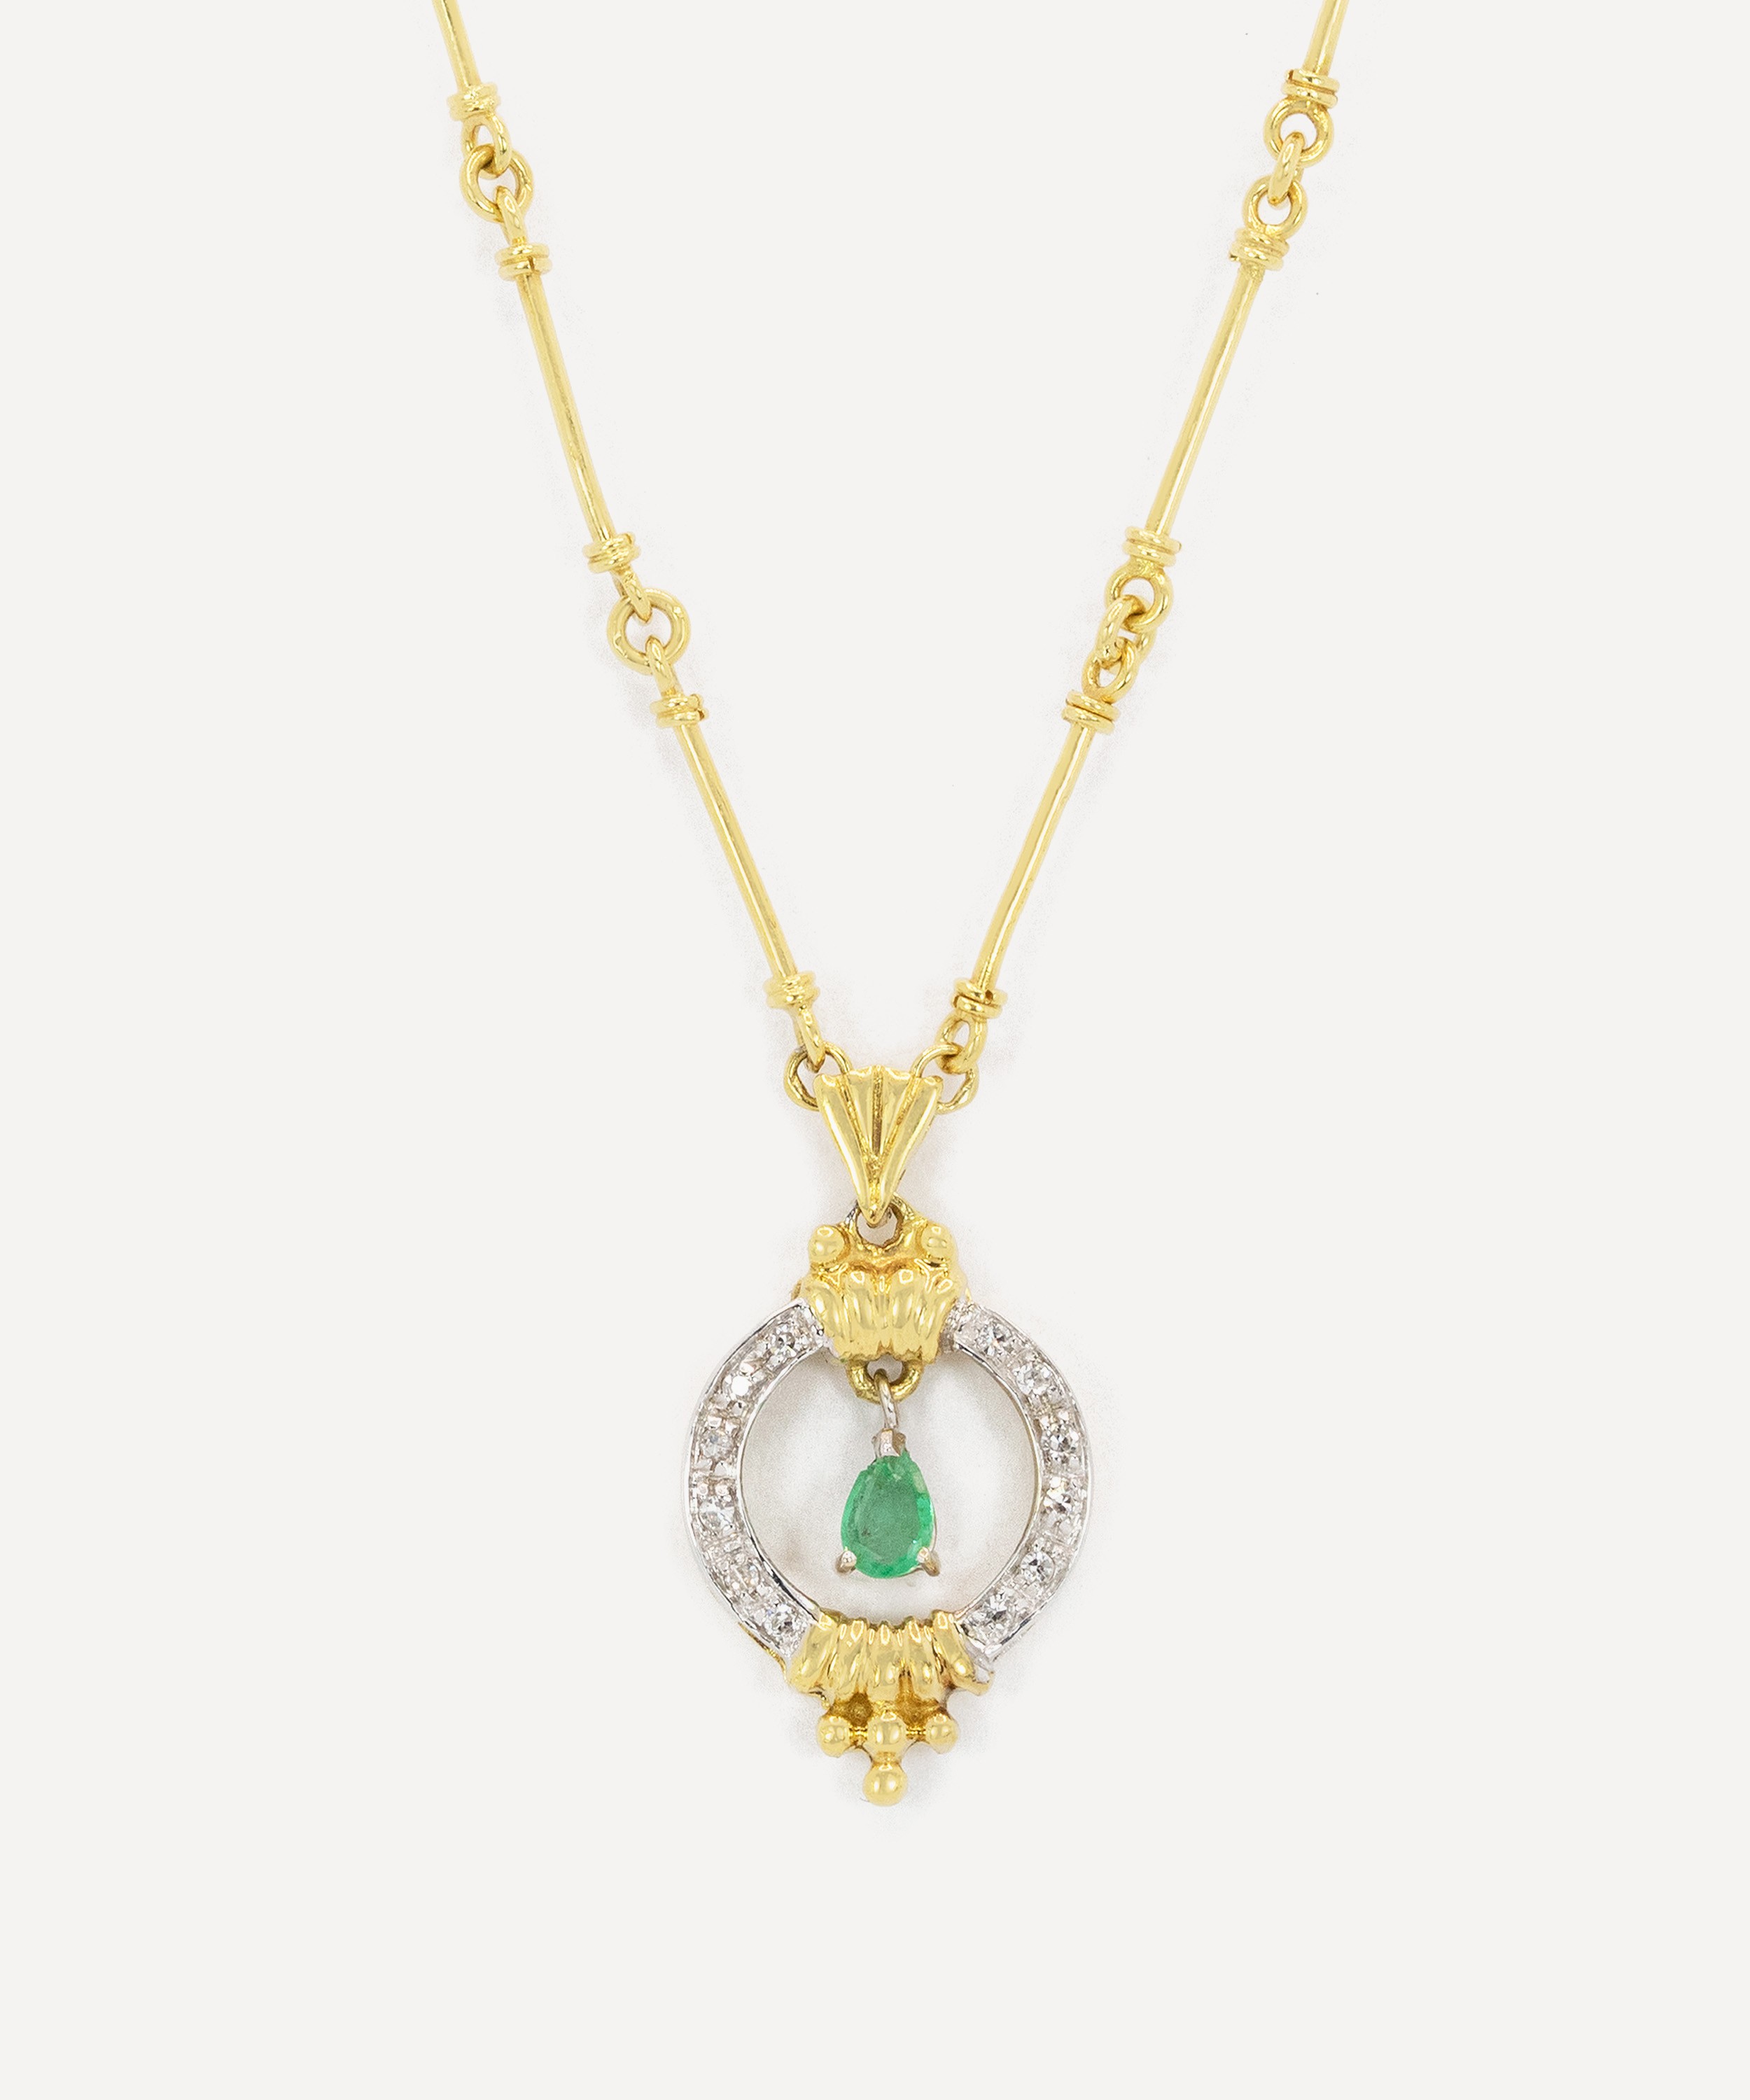 Kojis - 18ct Gold Vintage Emerald and Diamond Pendant Necklace